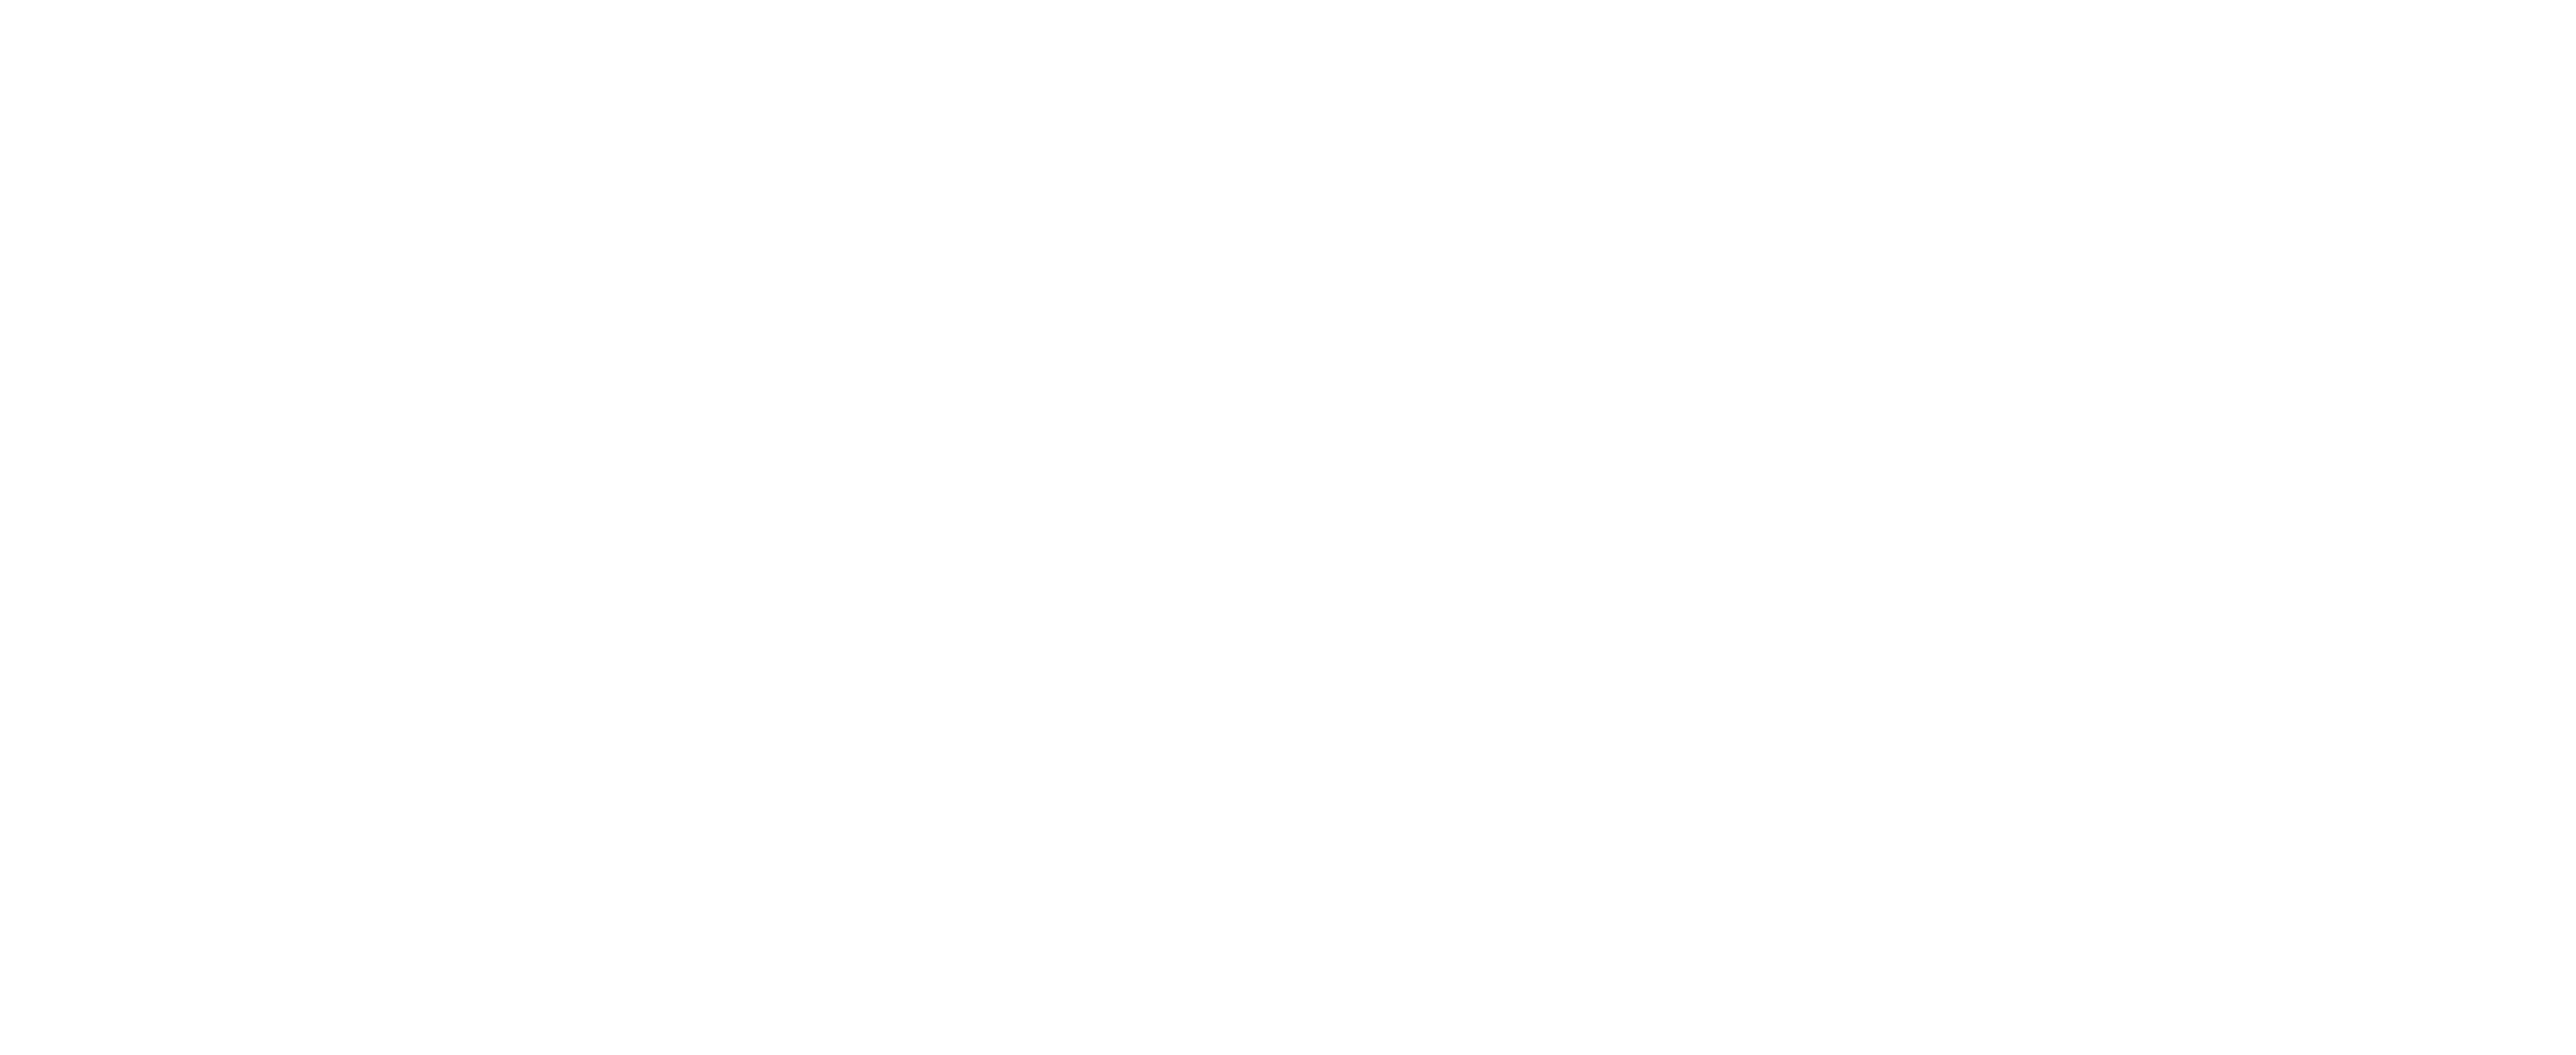 PledgX logo in white